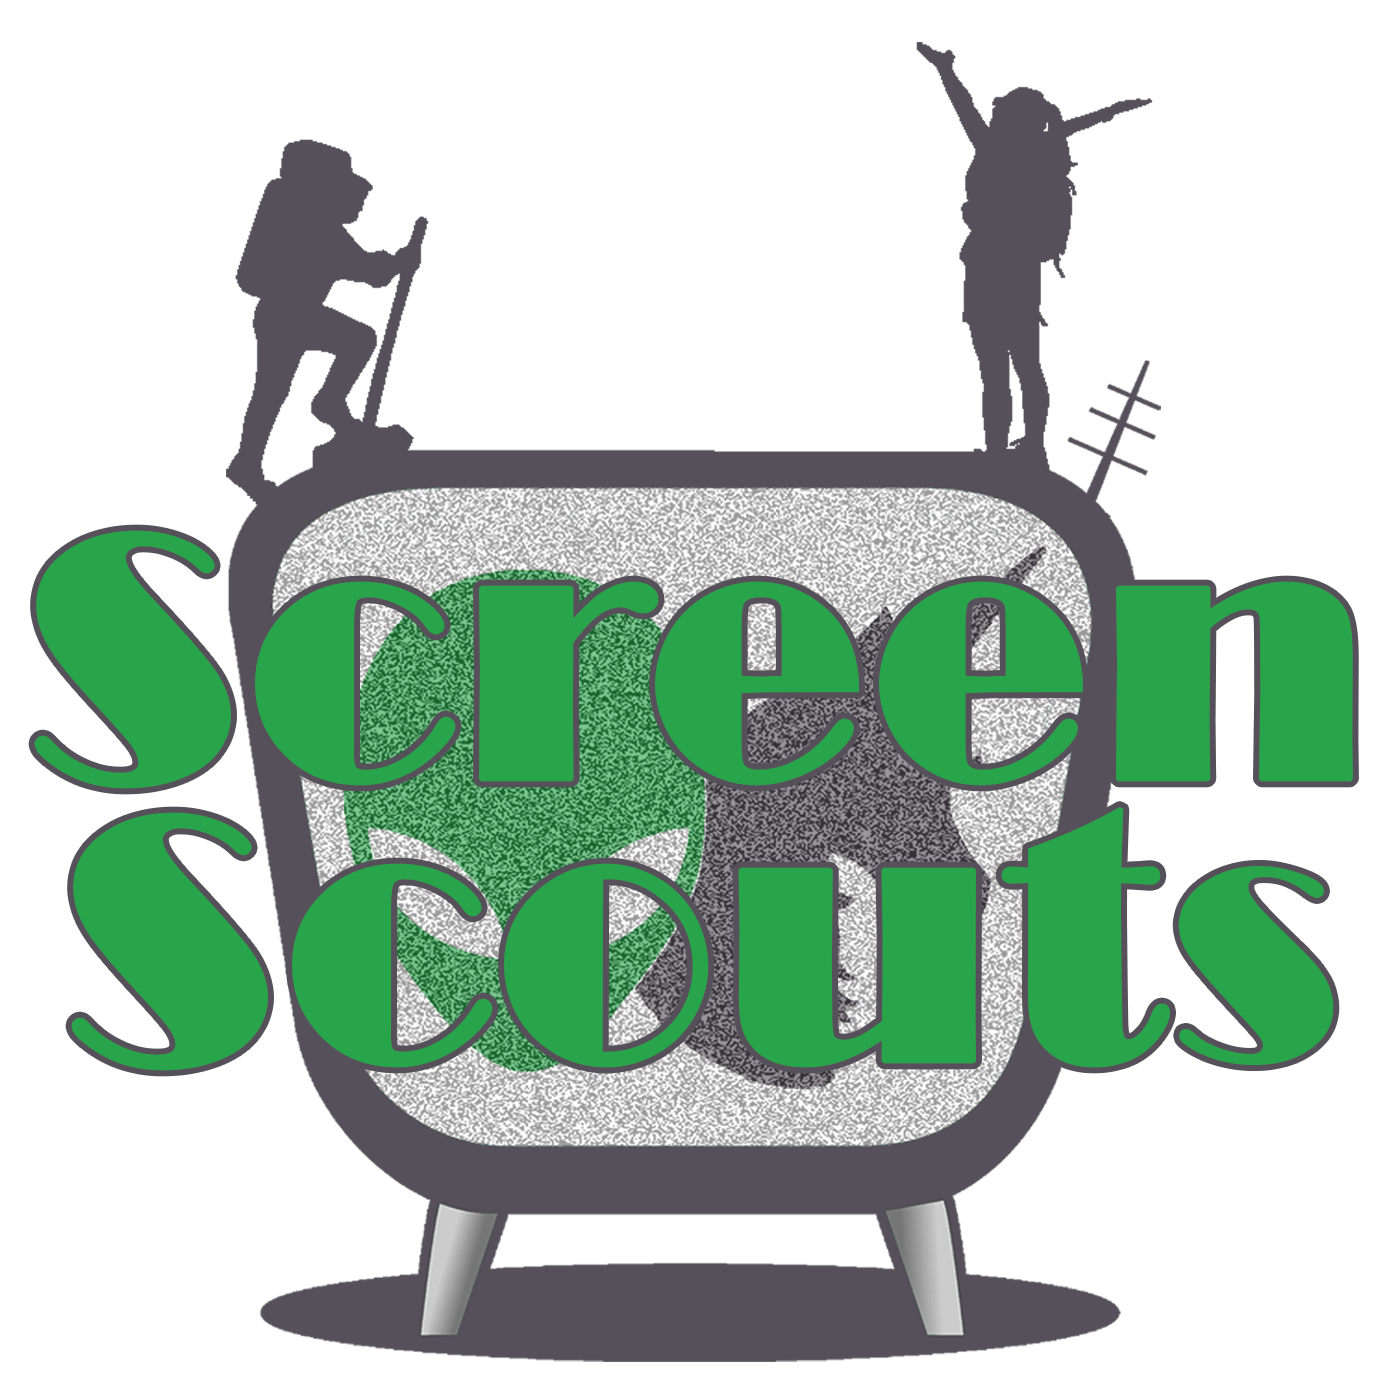 Screen Scouts